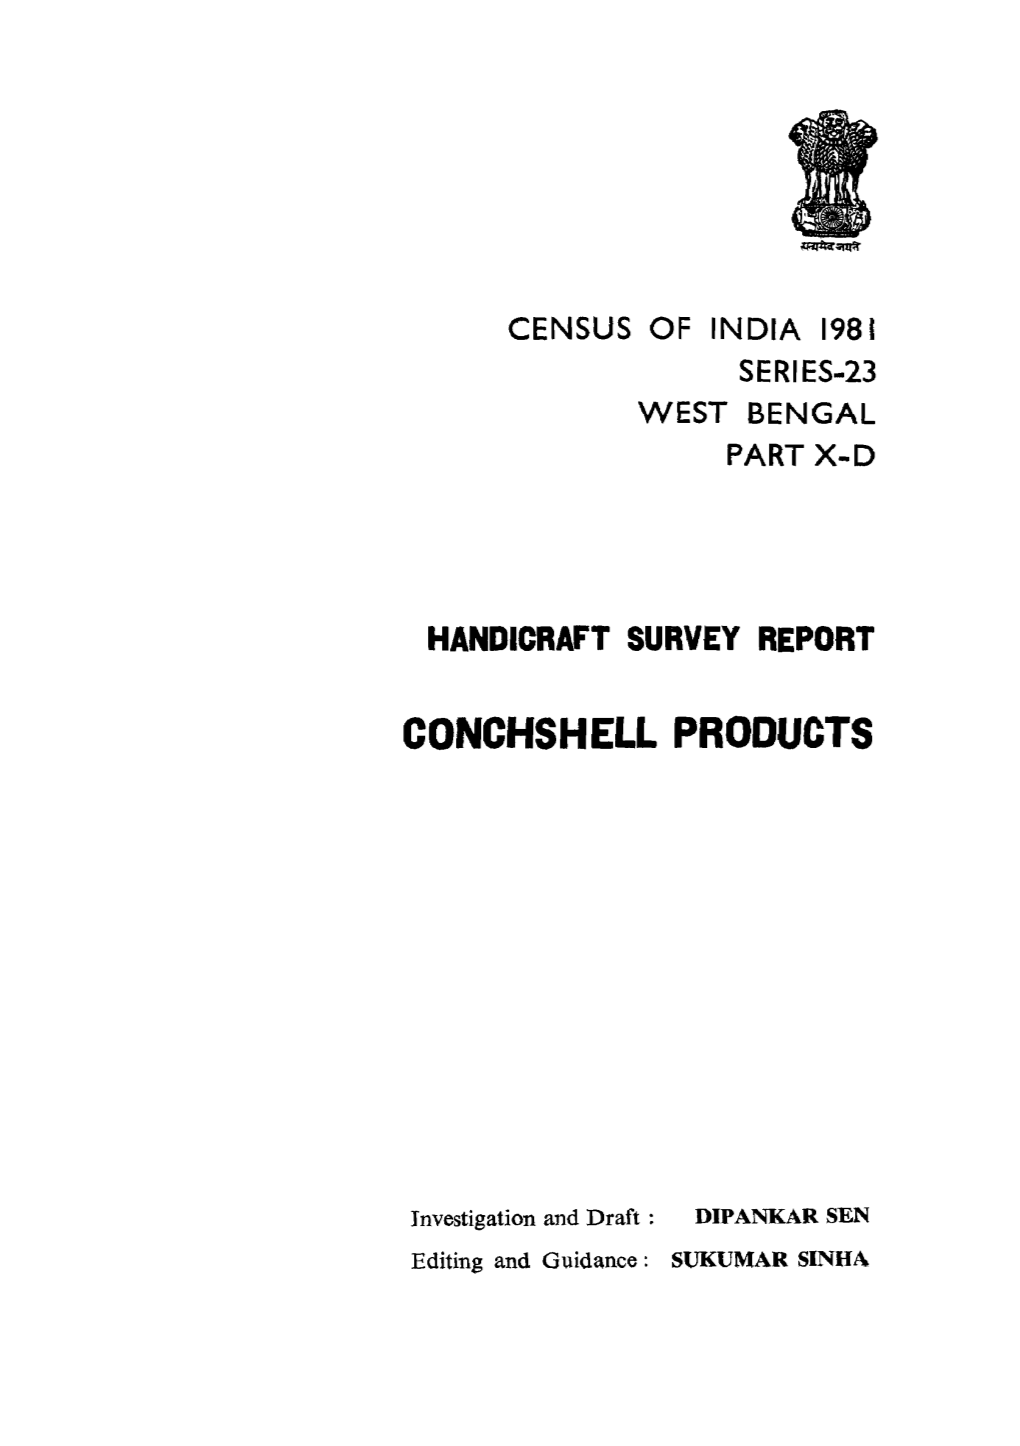 Handicraft Survey Report Conchshell Products , Part X D, Series-23, West